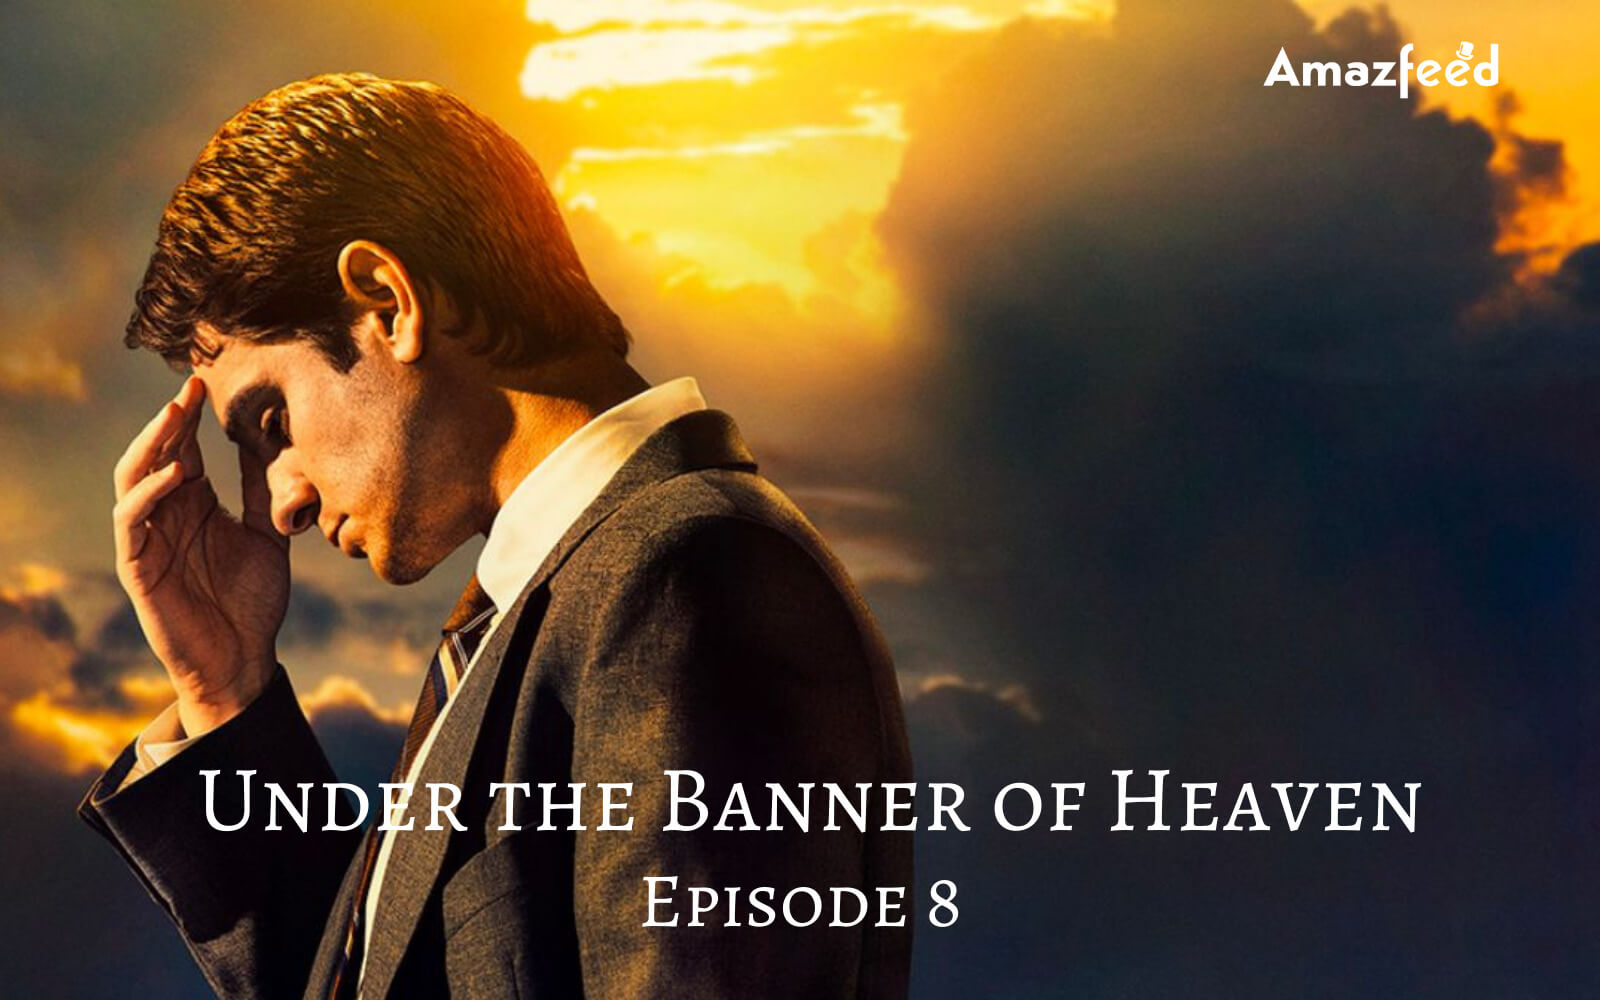 Under the Banner of Heaven Season 1 Episode 8 Release date